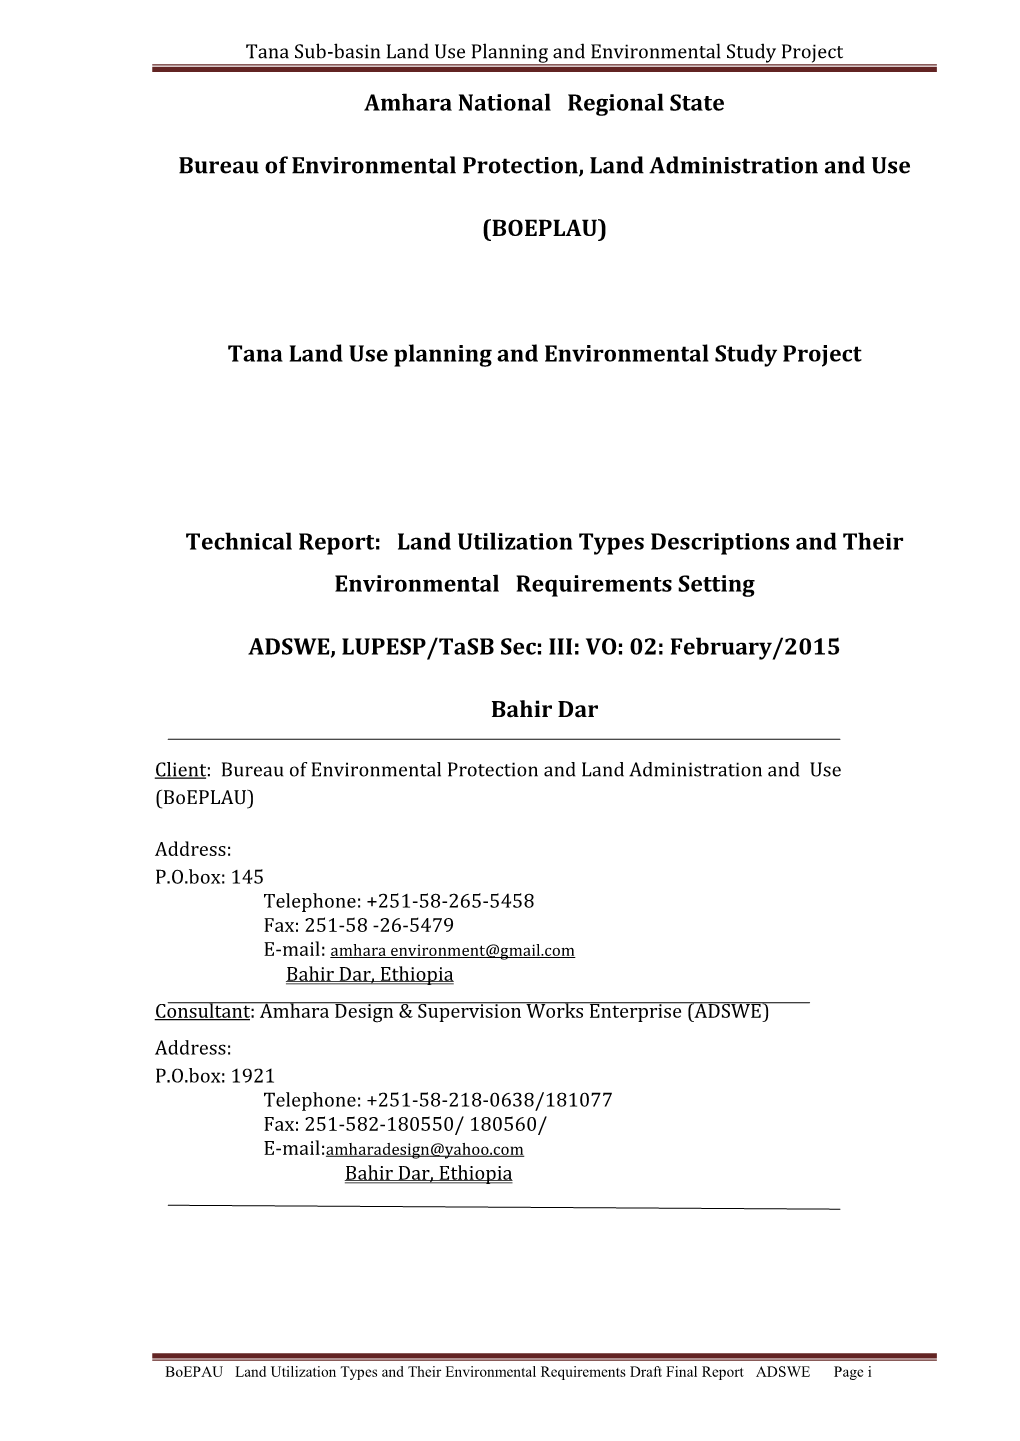 Tana Sub-Basin Land Use Planning and Environmental Study Project